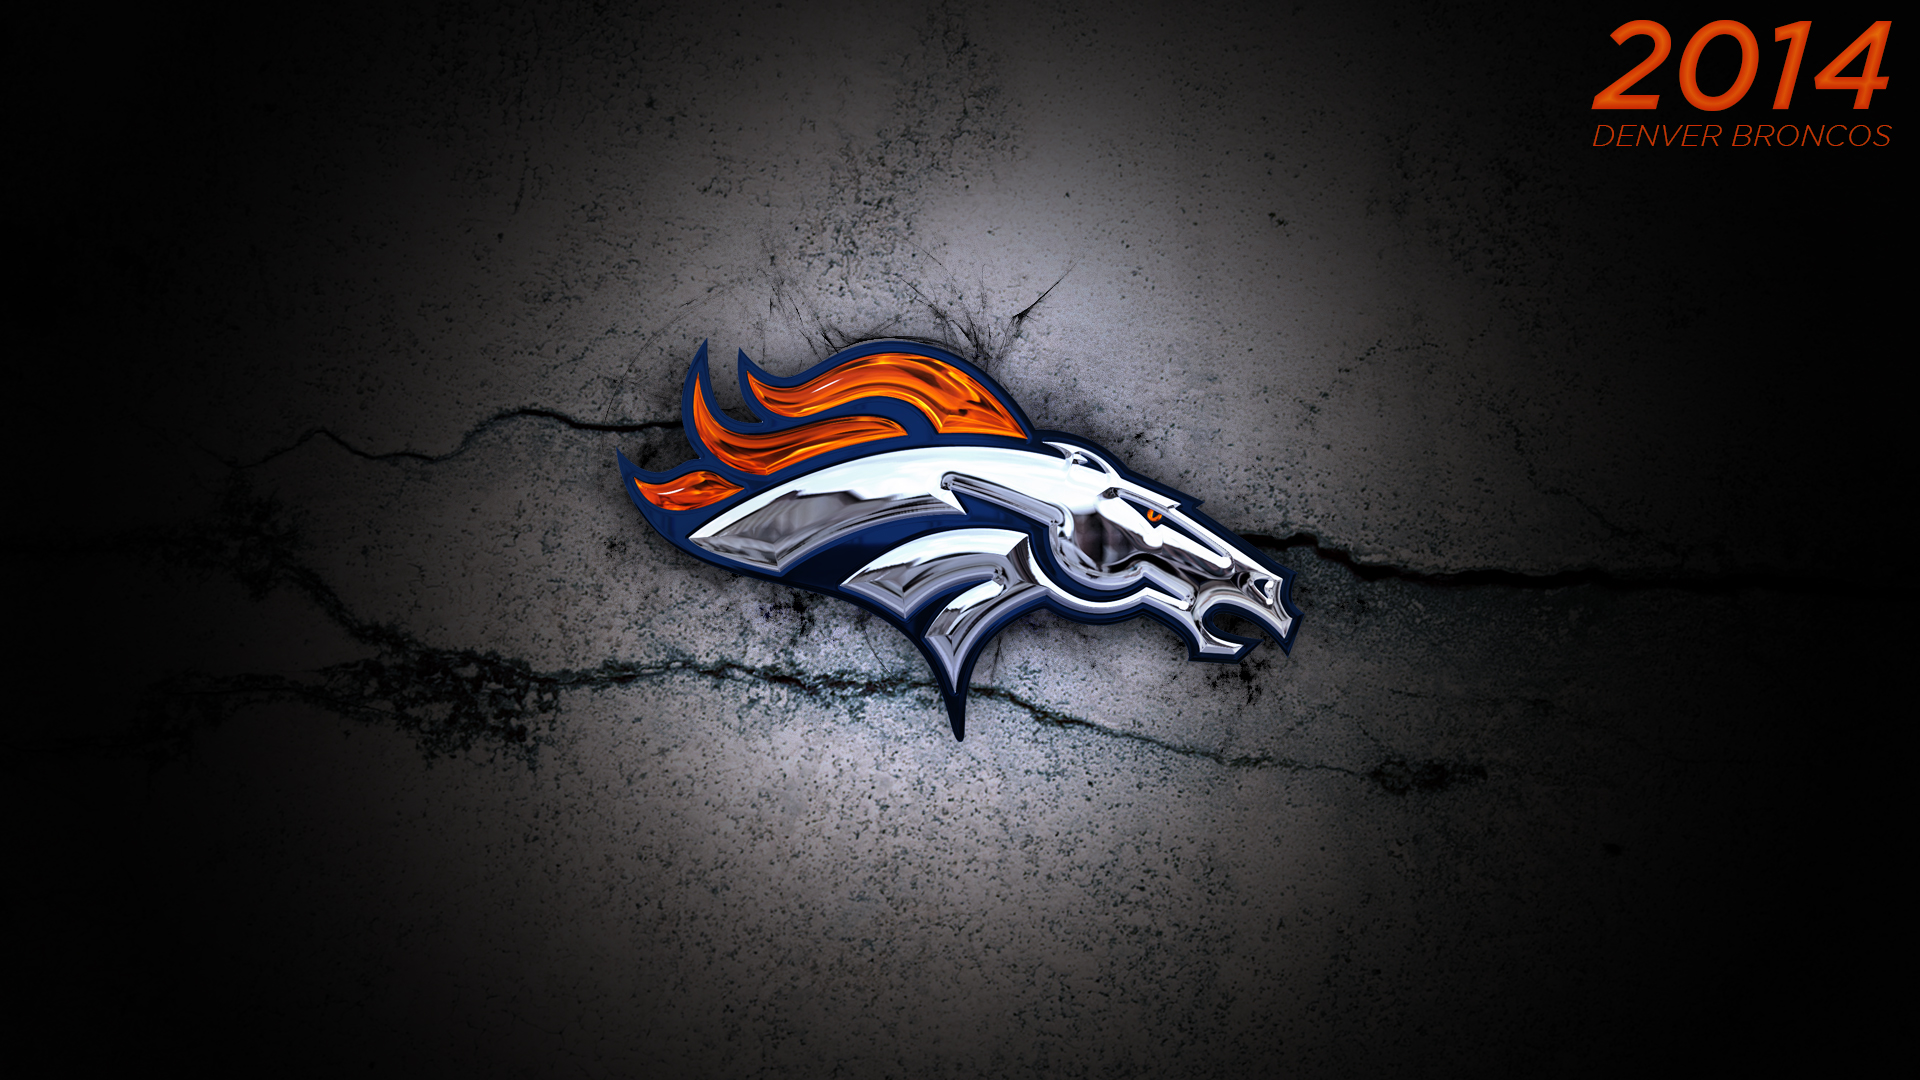 Denver Broncos Wallpaper 2014 Schedule 2014 denver broncos logo